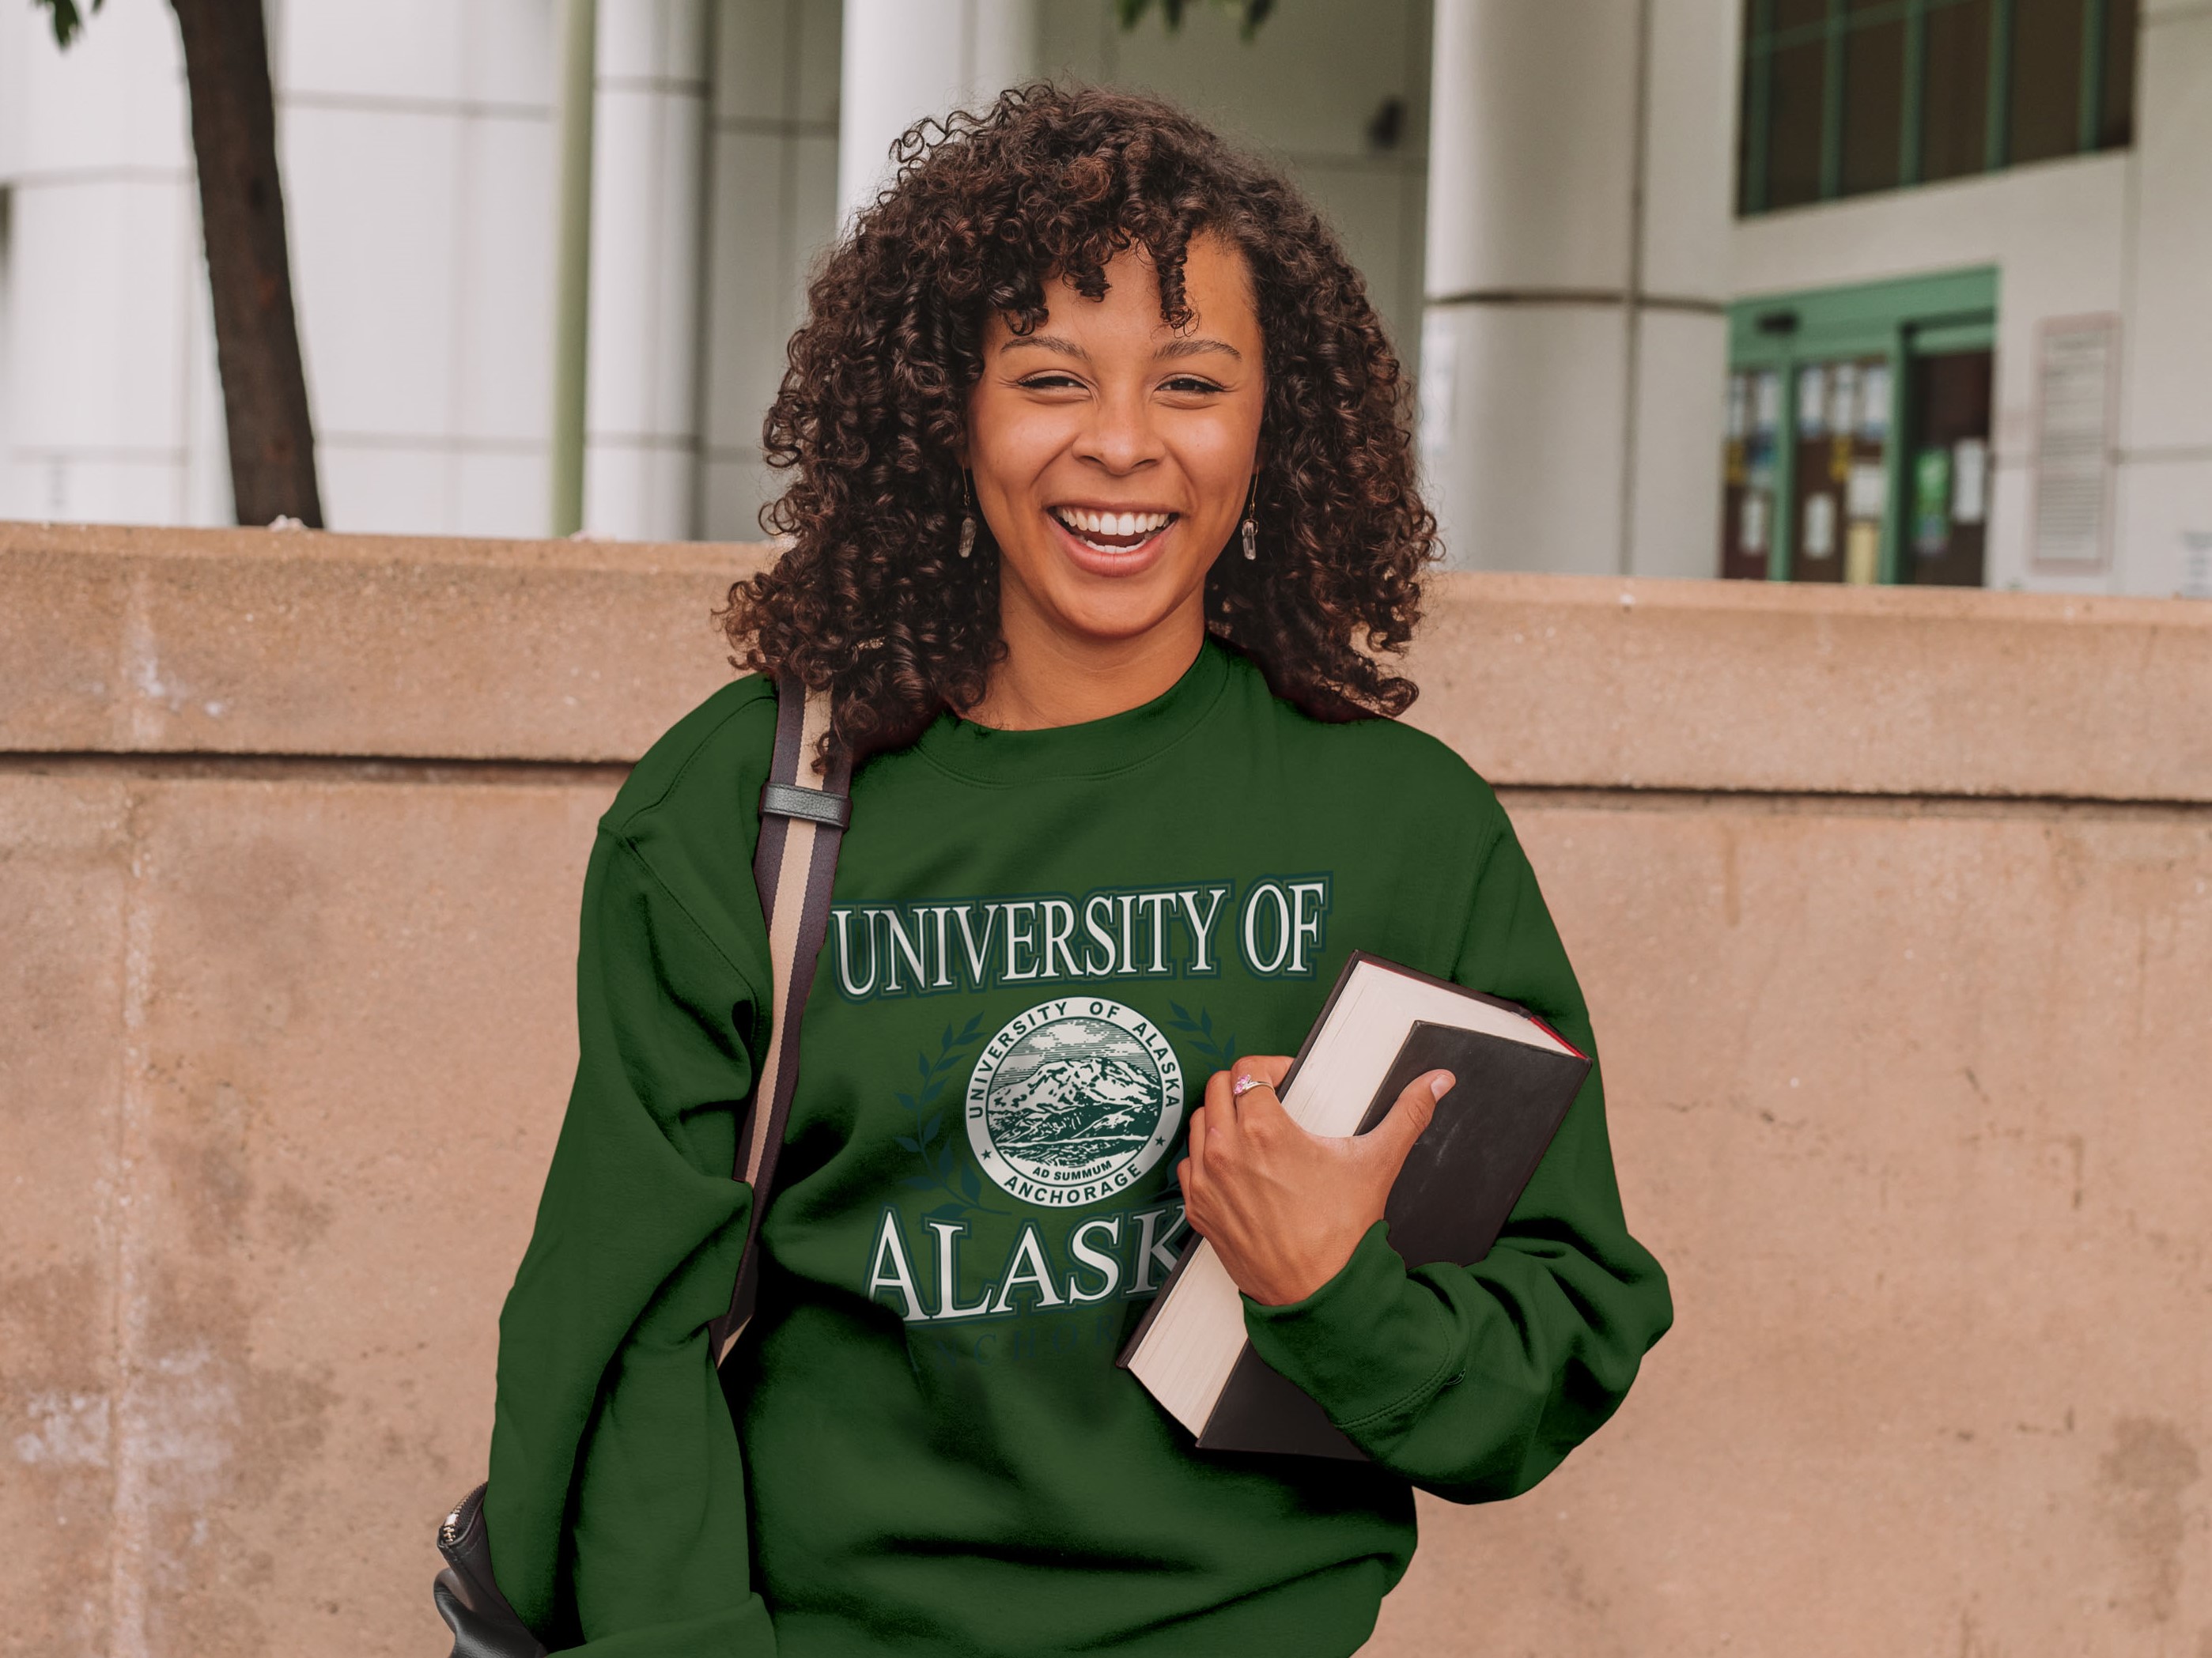 Student wearing green ɫƬ sweatshirt